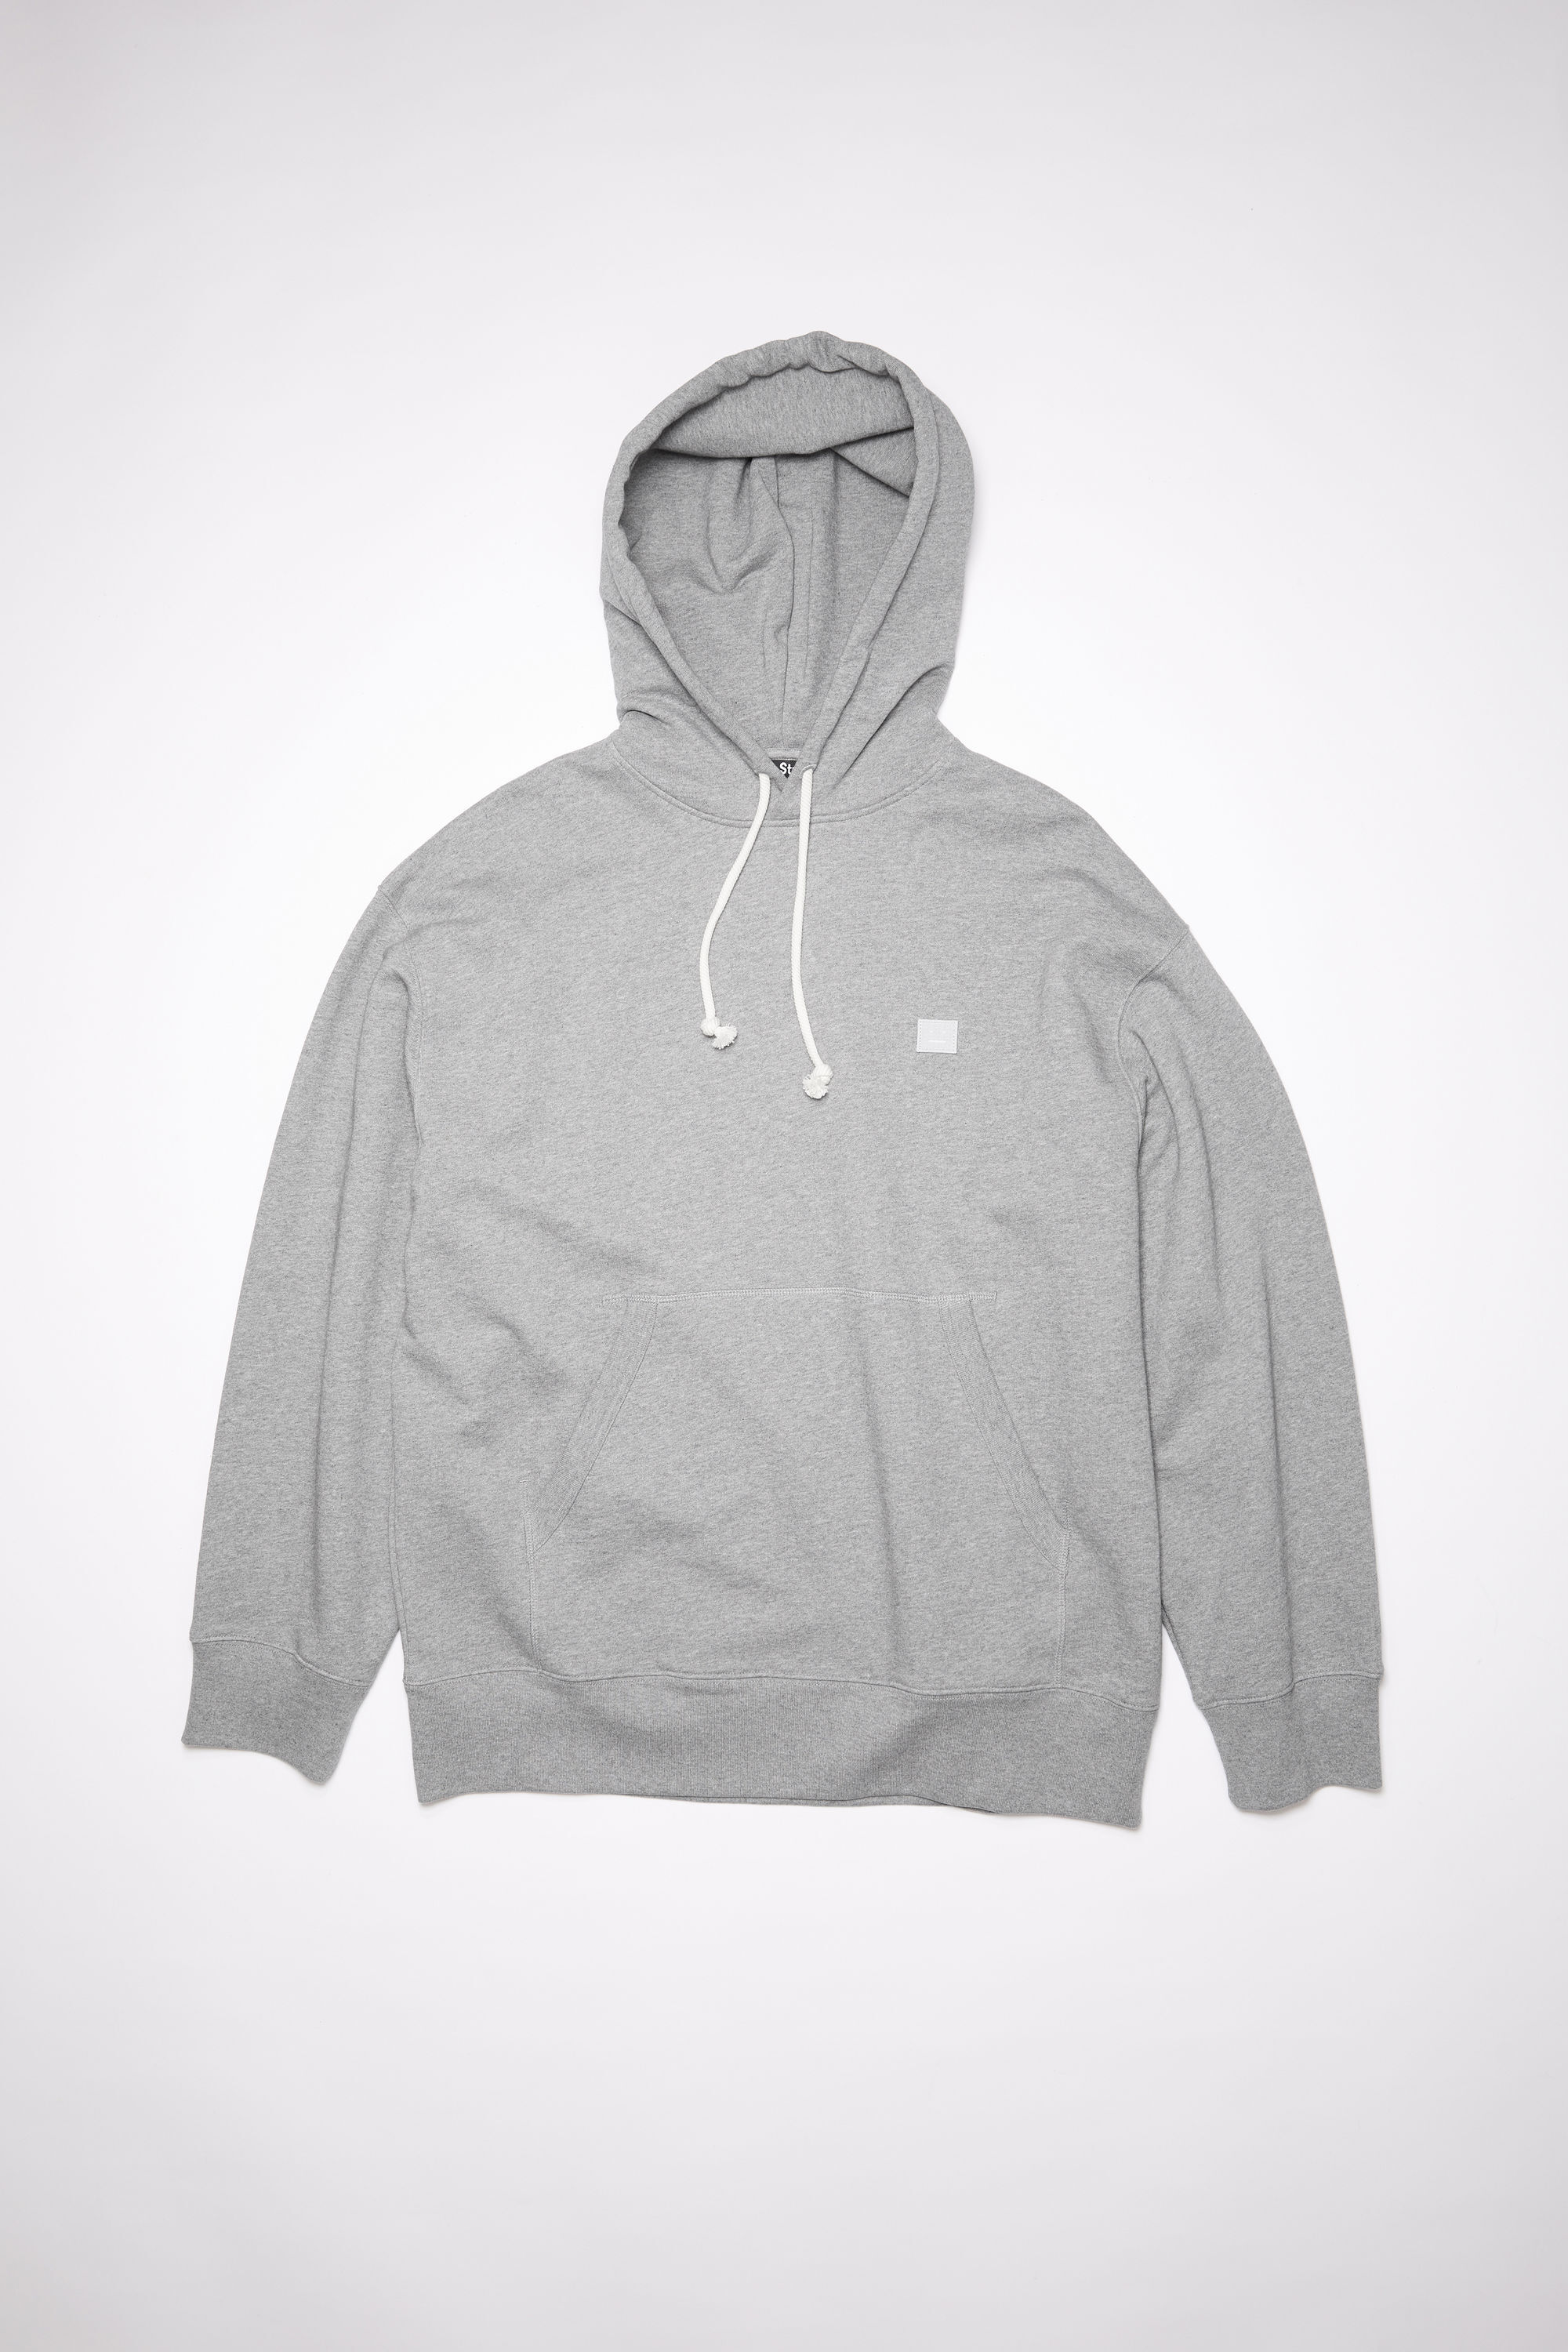 Acne Studios - Hooded sweatshirt - Oversized fit - Light Grey Melange